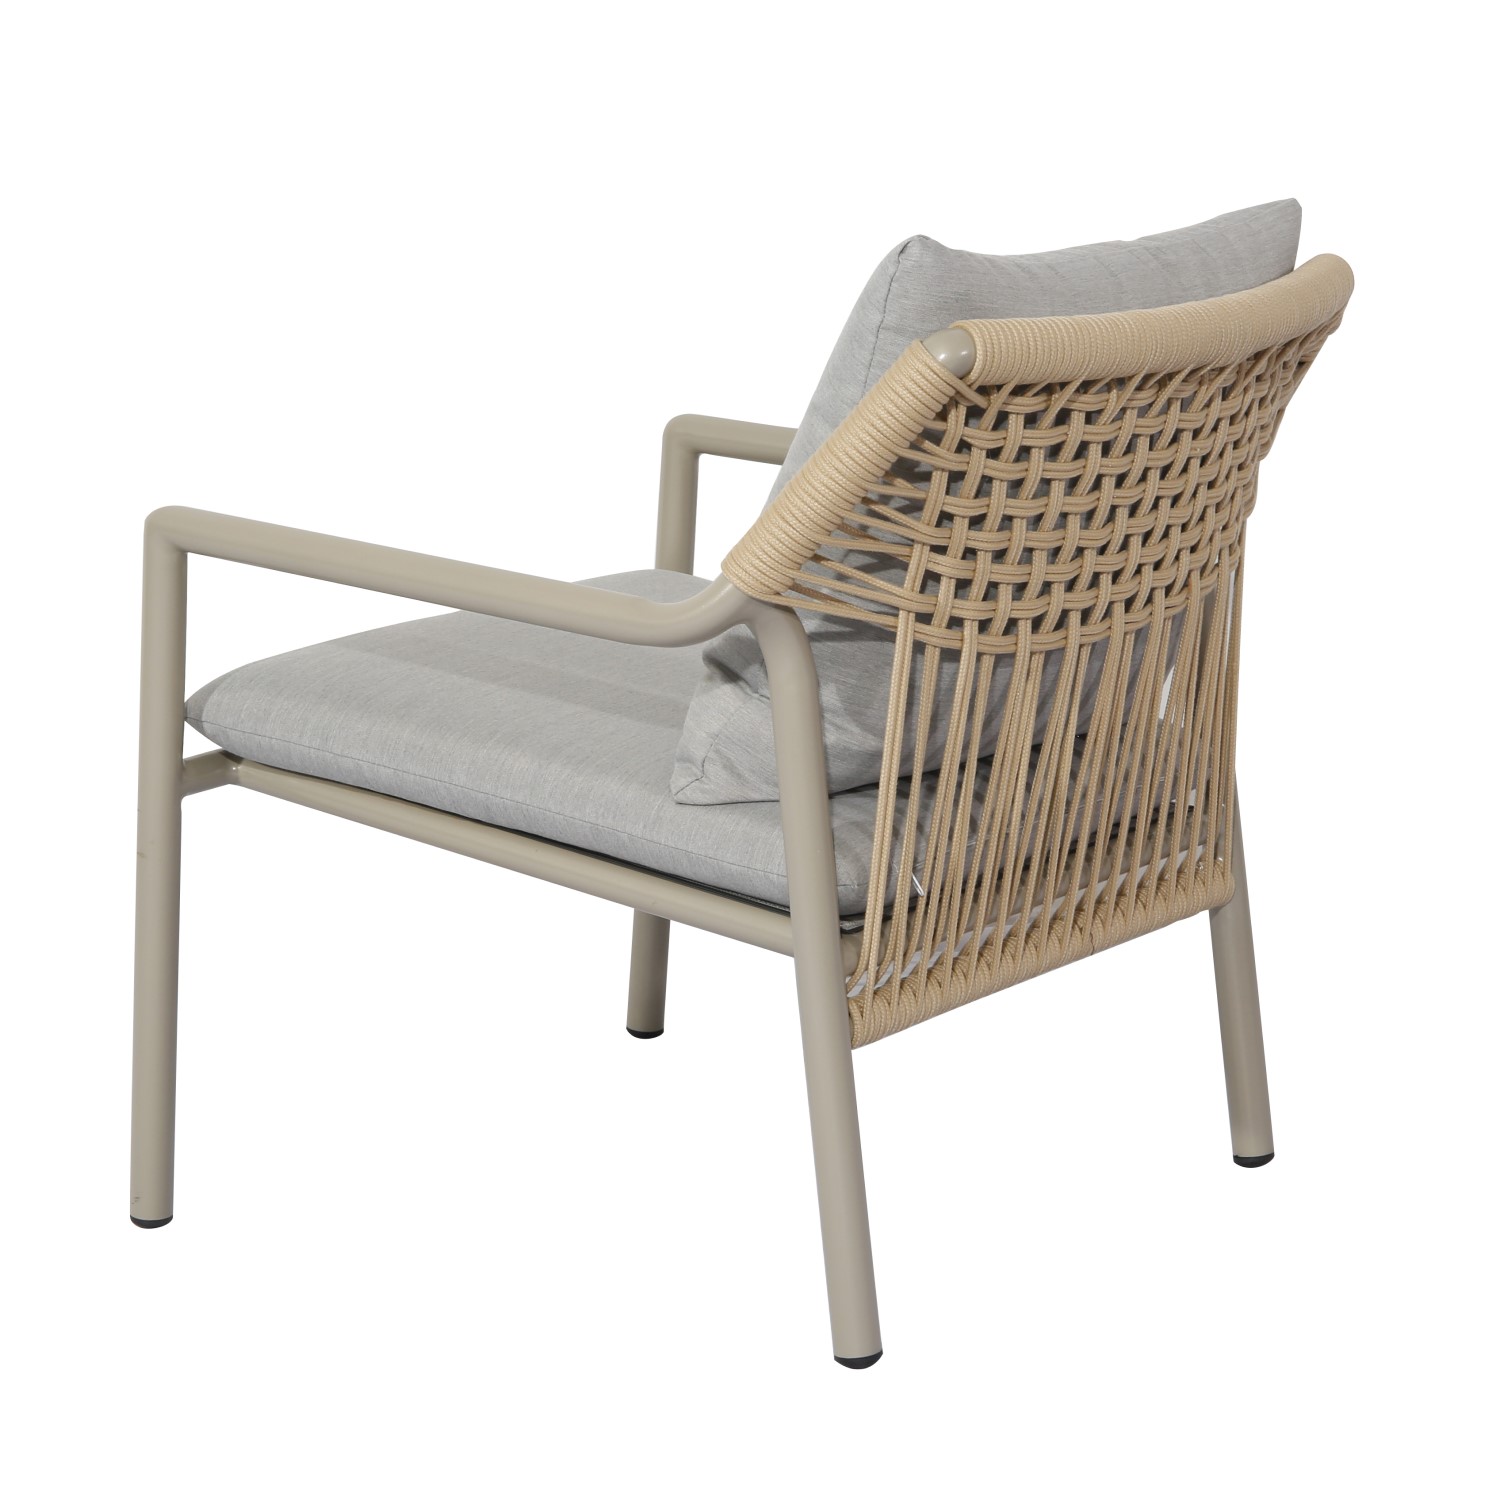 KF019 Nordic Design Outdoor Garden Hotel Leisure Cafe Table Chair Set